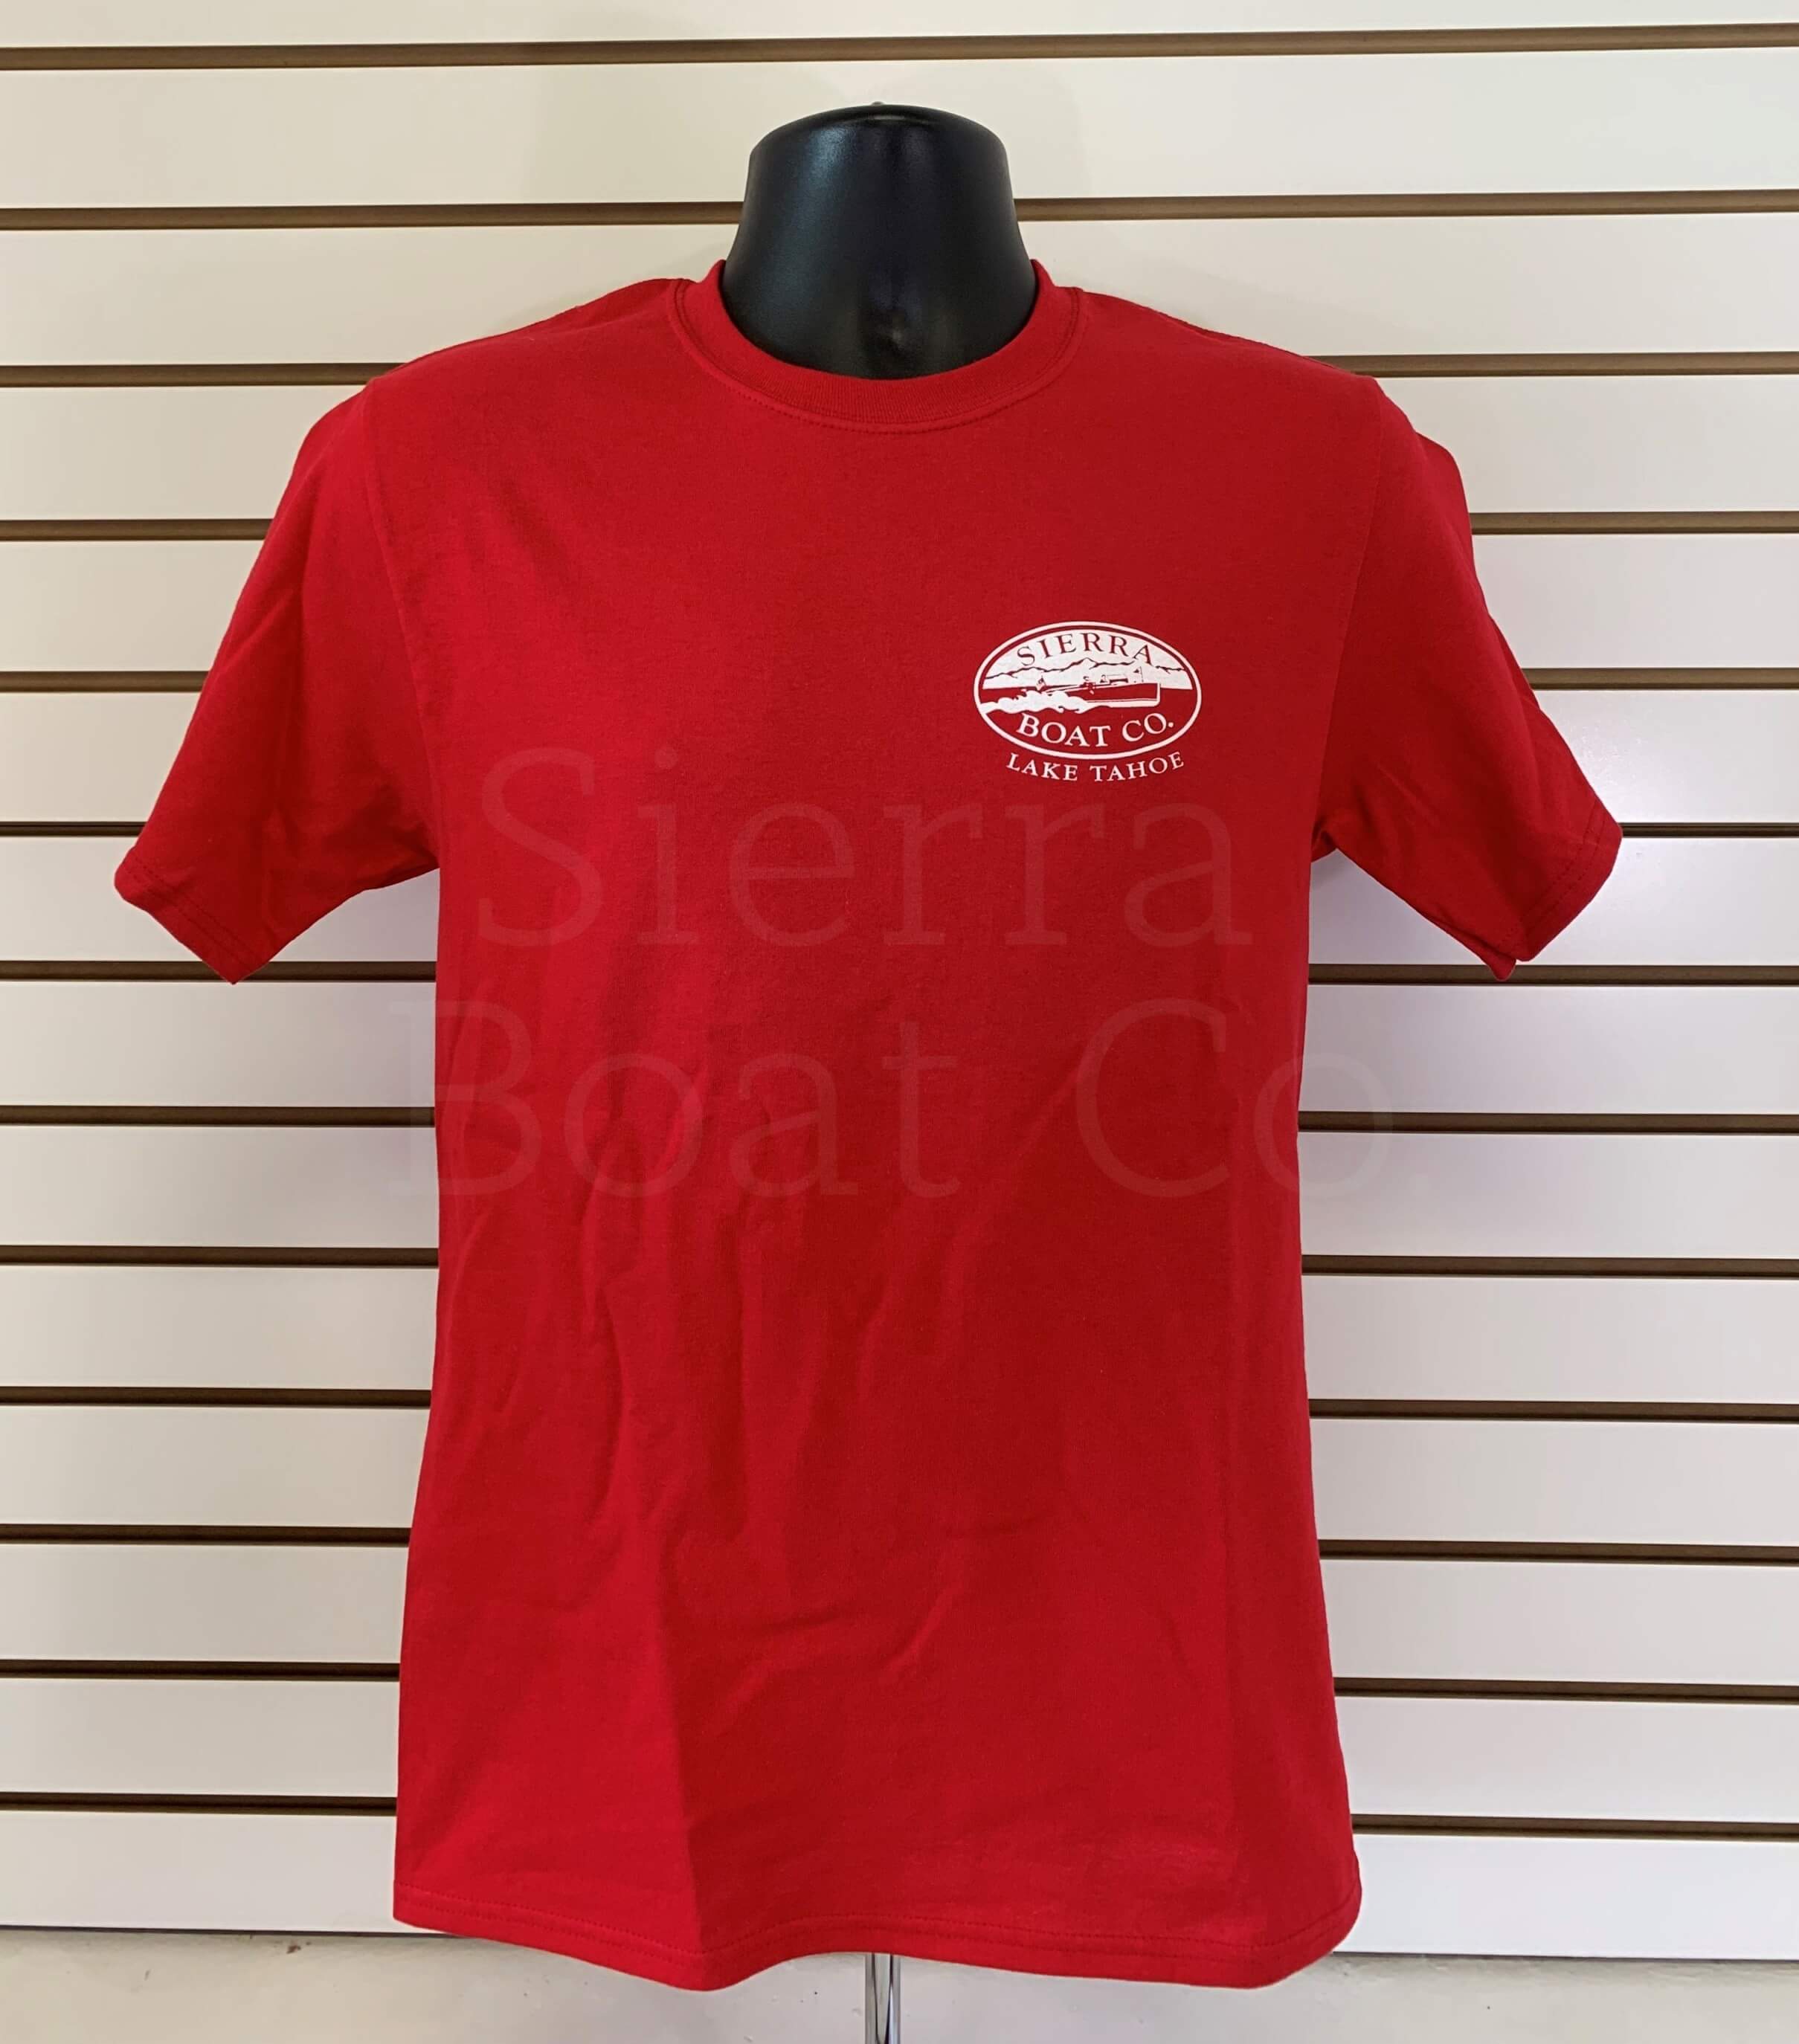 Classic red Company - Sierra T-shirt. Boat